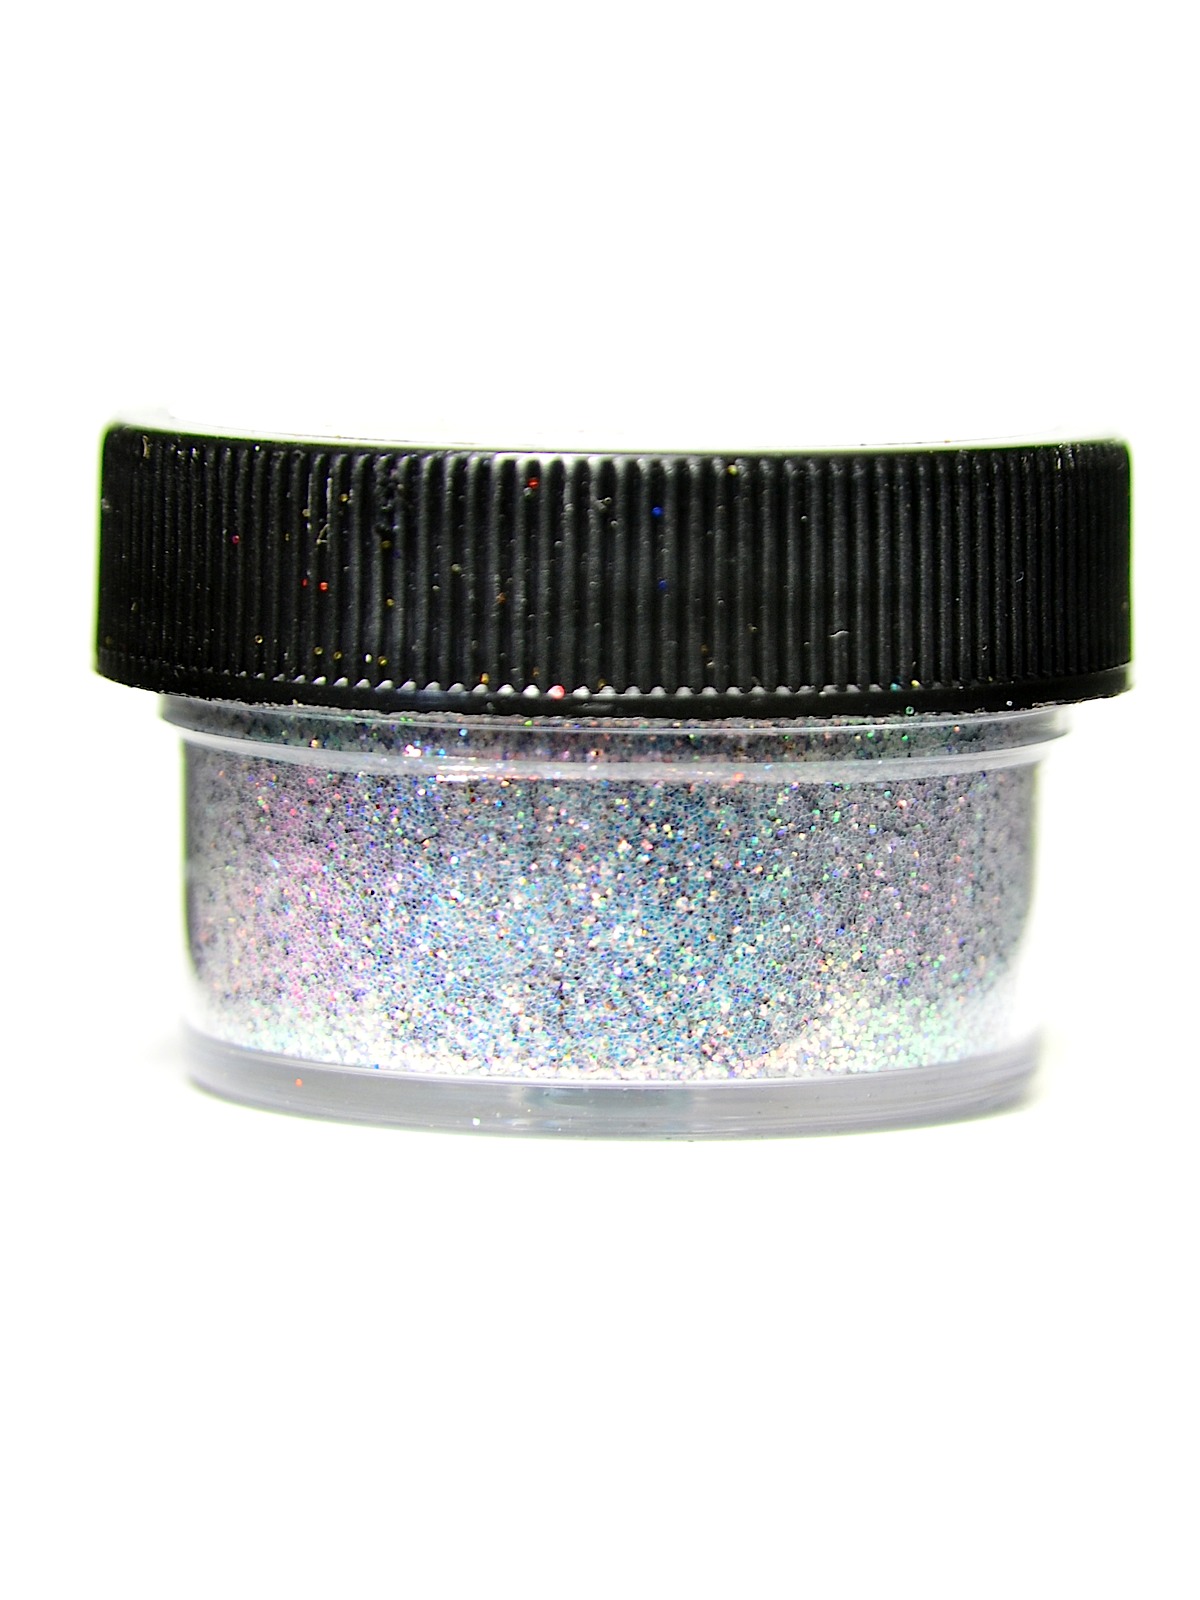 Ultrafine Transparent Glitter Fog 1 2 Oz. Jar